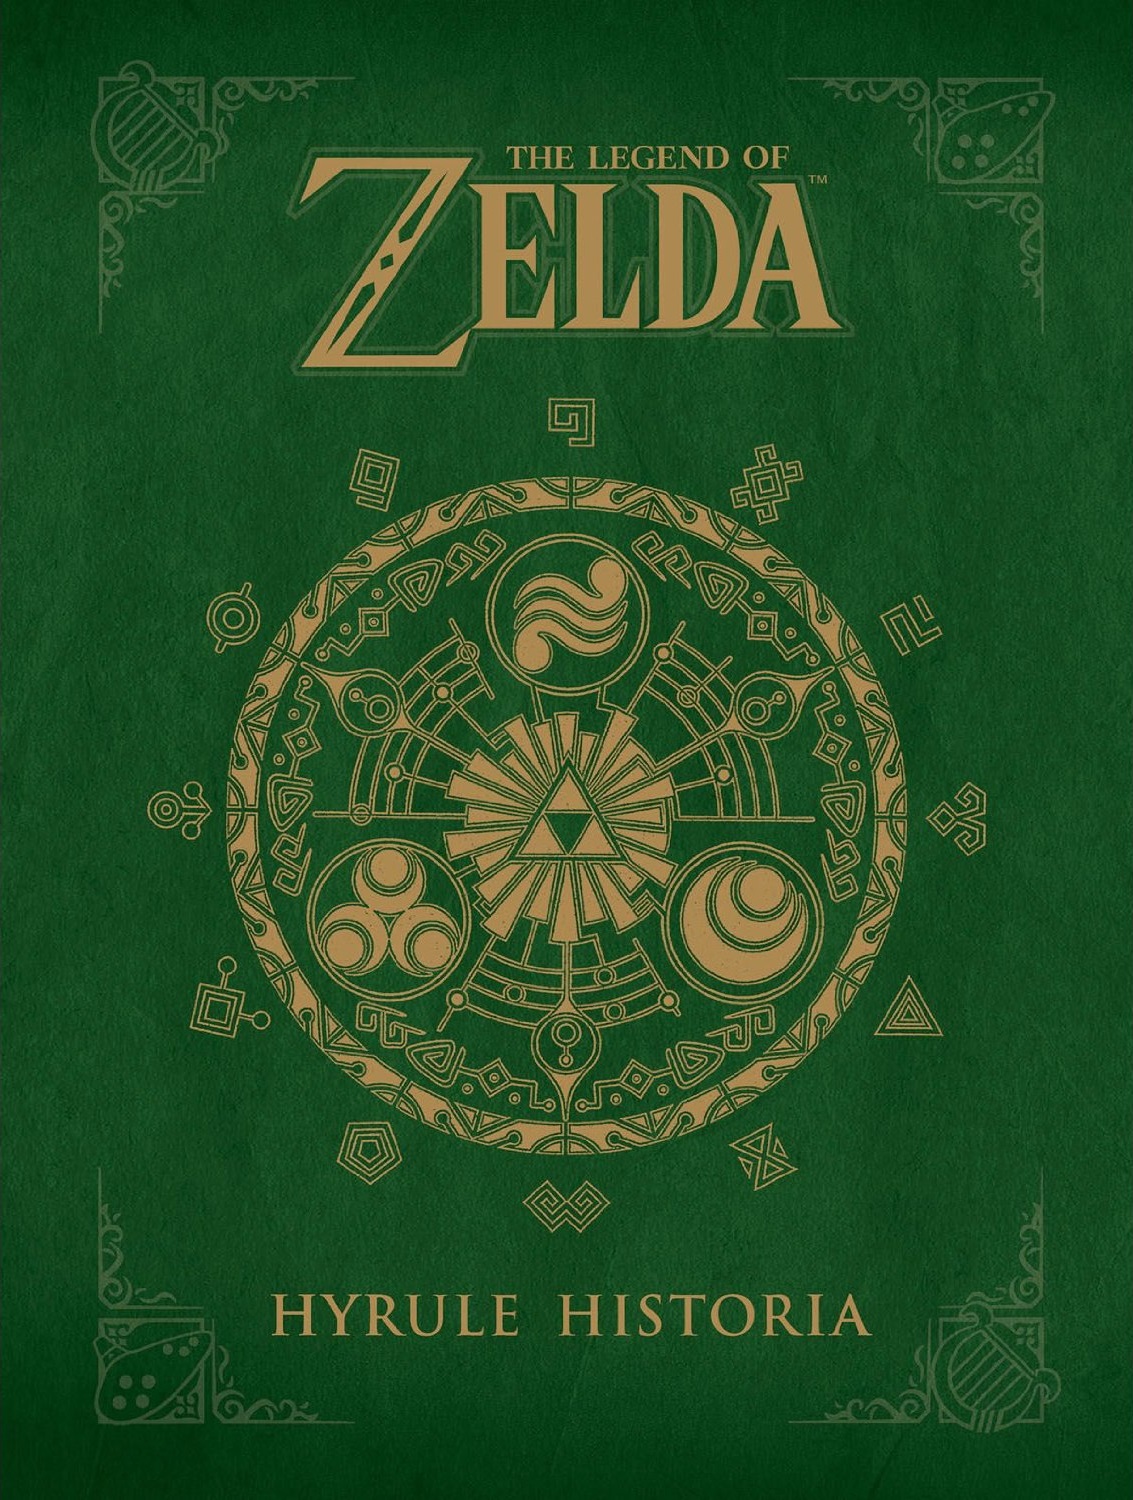 The Legend Of Zelda Encyclopedia Deluxe Edition - By Nintendo